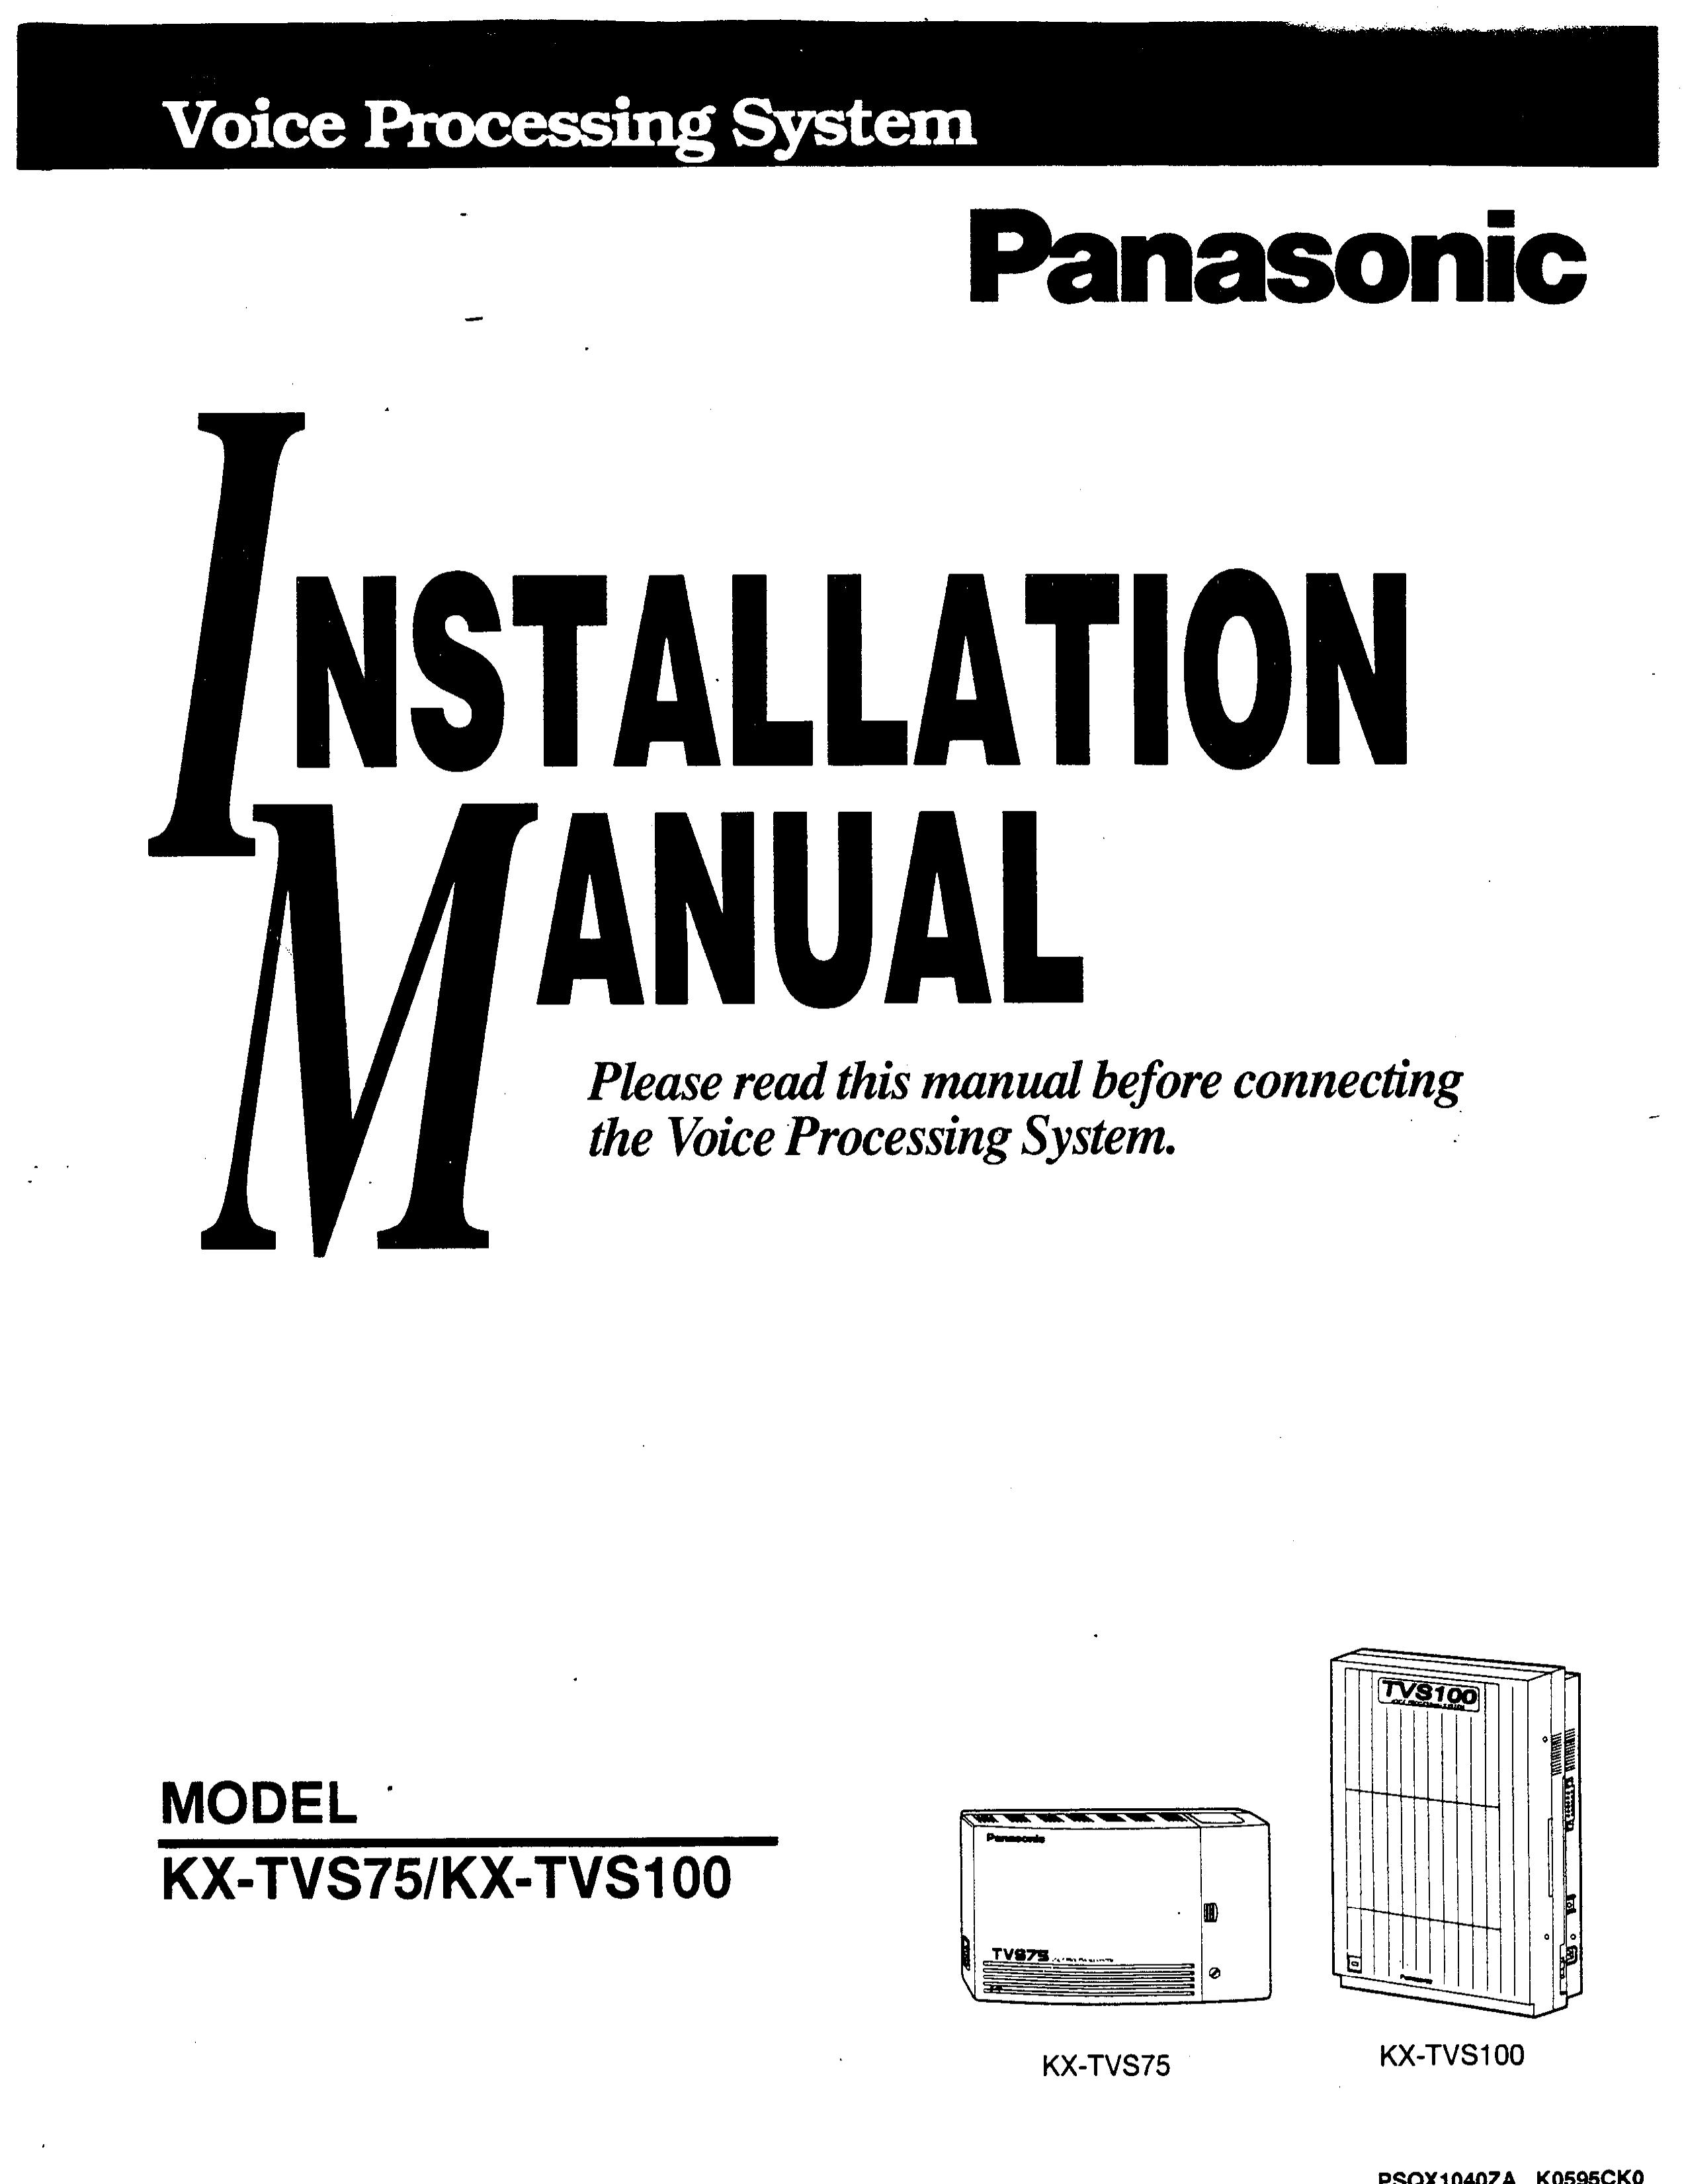 Panasonic panasonic Recording Equipment User Manual